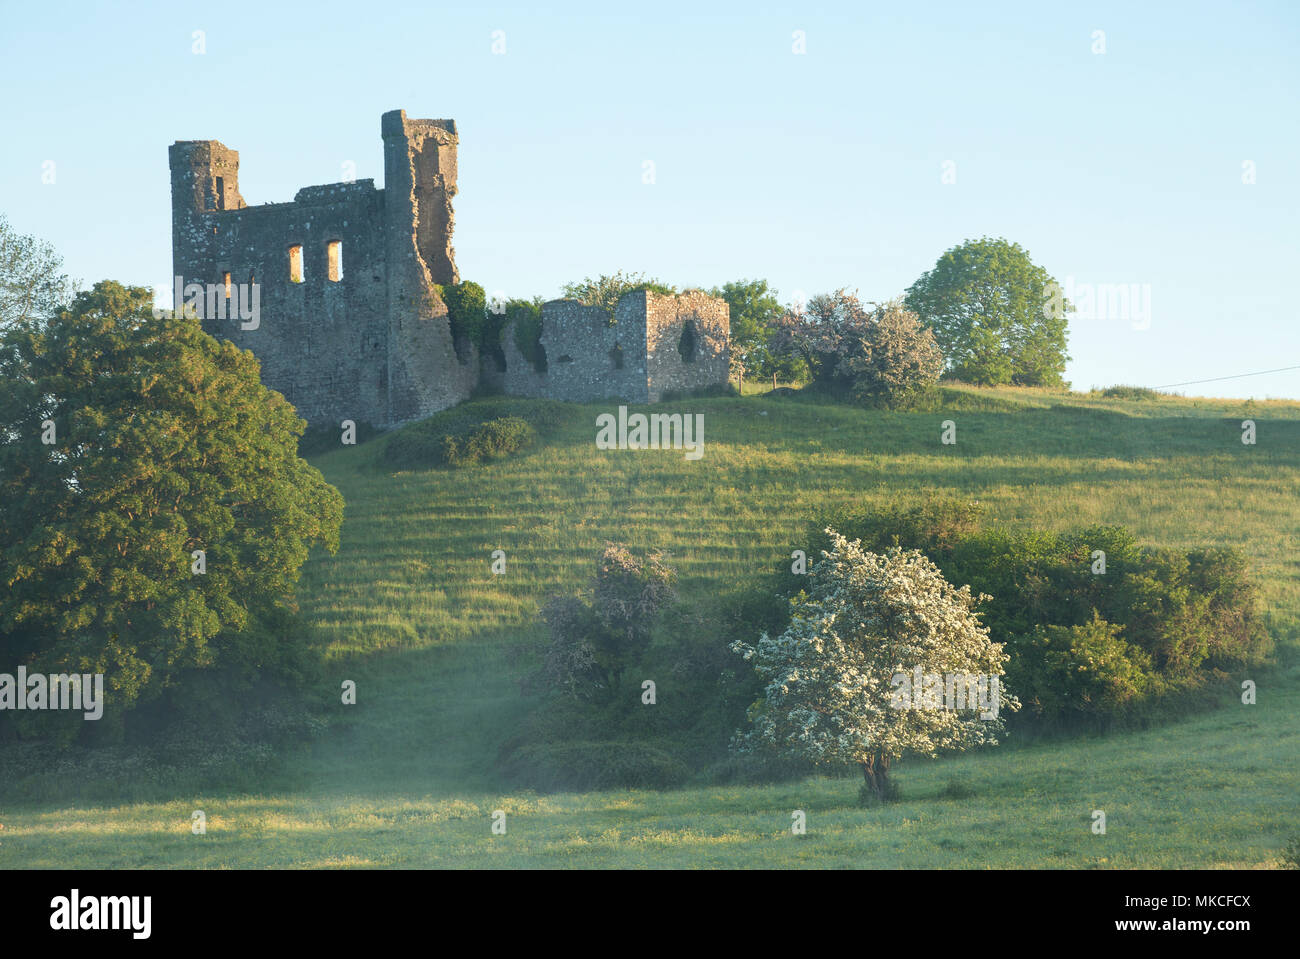 Dunmoe Castle am Ufer des Rover Boyne, County Meath Irland Stockfoto